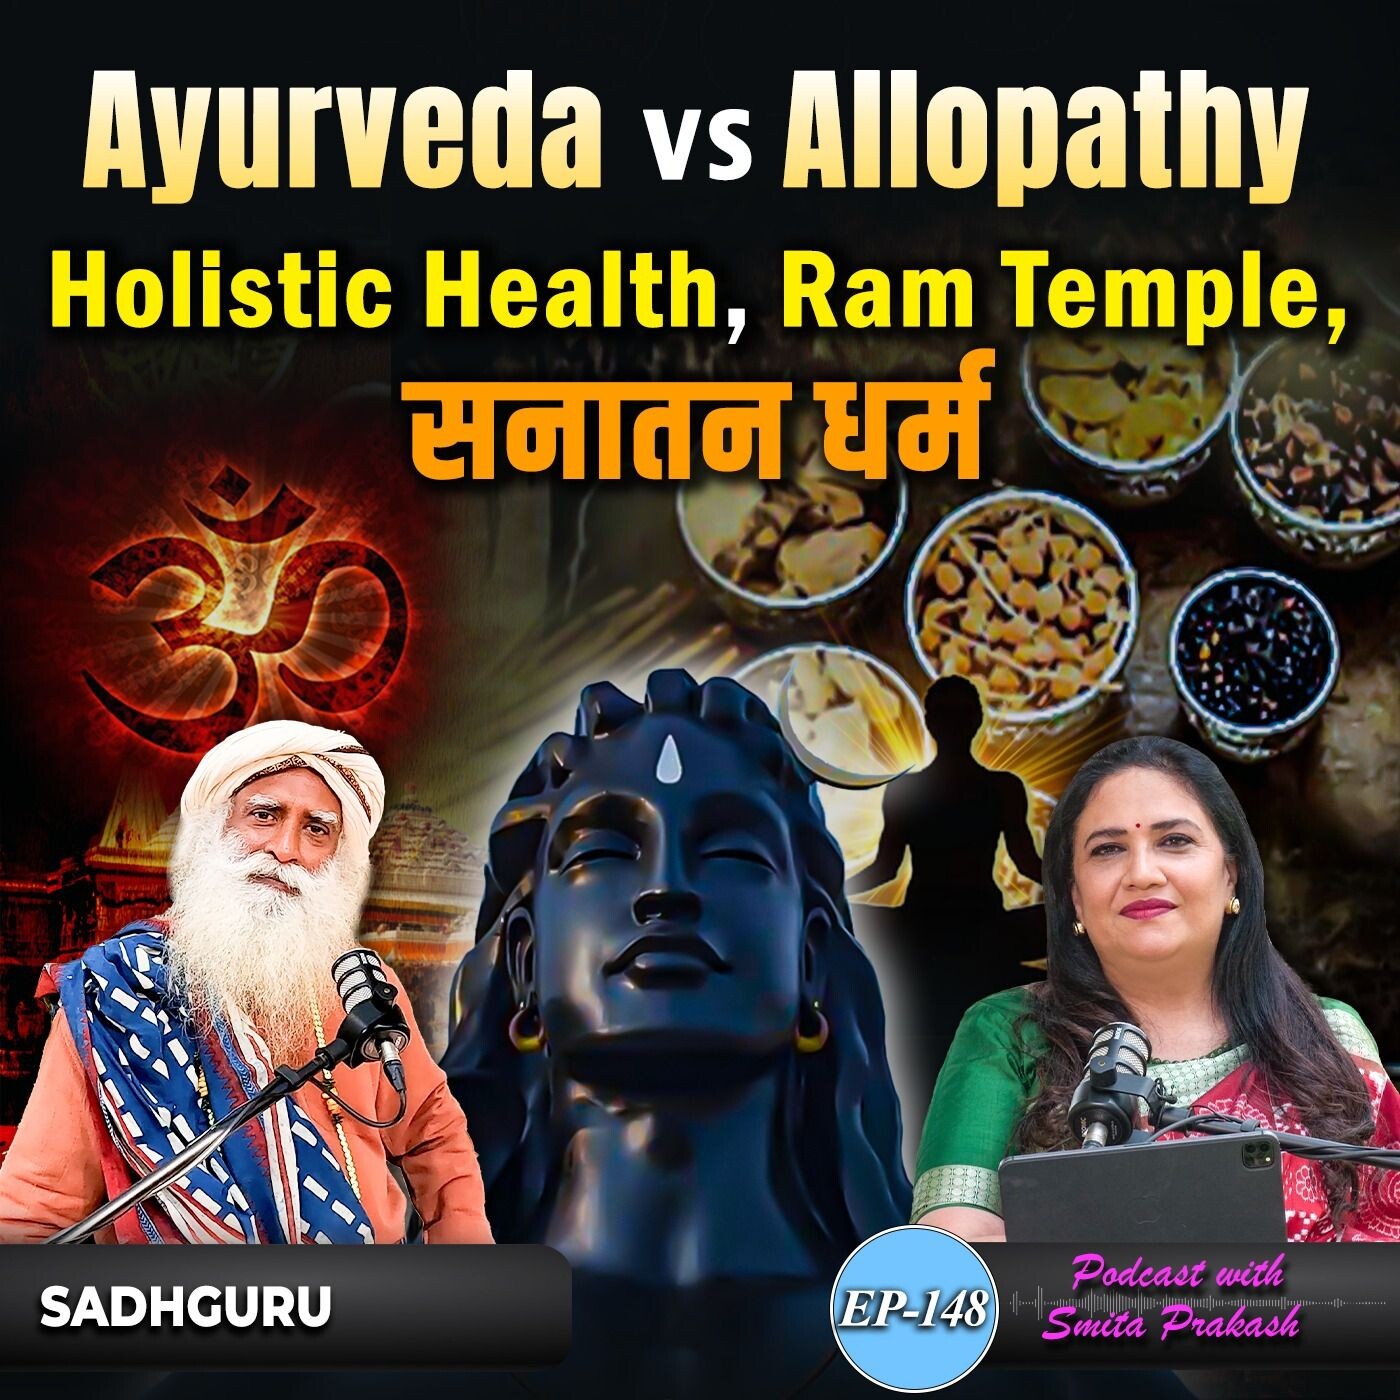 EP 148 - Ayurveda Vs Allopathy, Holistic Health, Sanatana Dharma & Ram Temple with Sadhguru